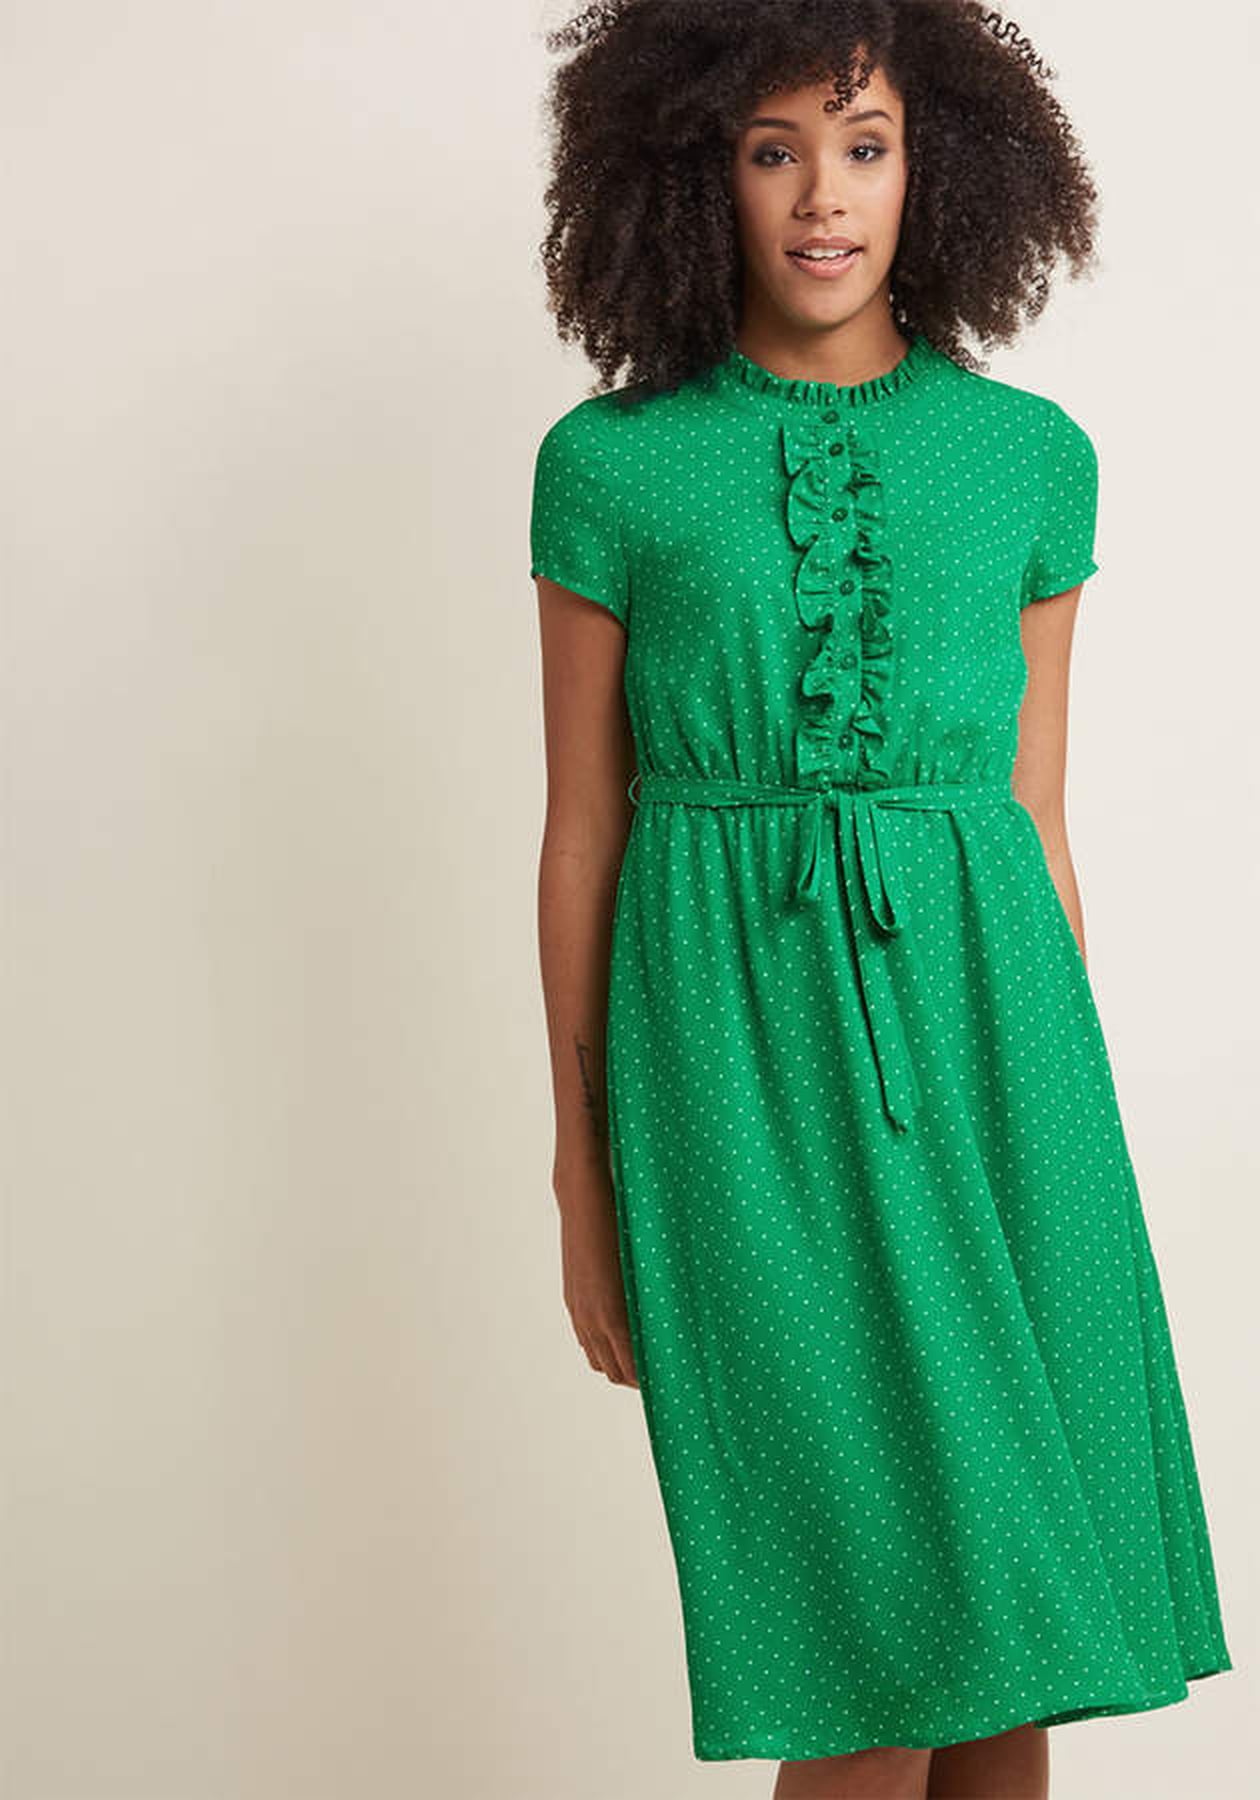 Emily Ratajkowski Wearing Reformation Green Polka-Dot Dress | POPSUGAR ...